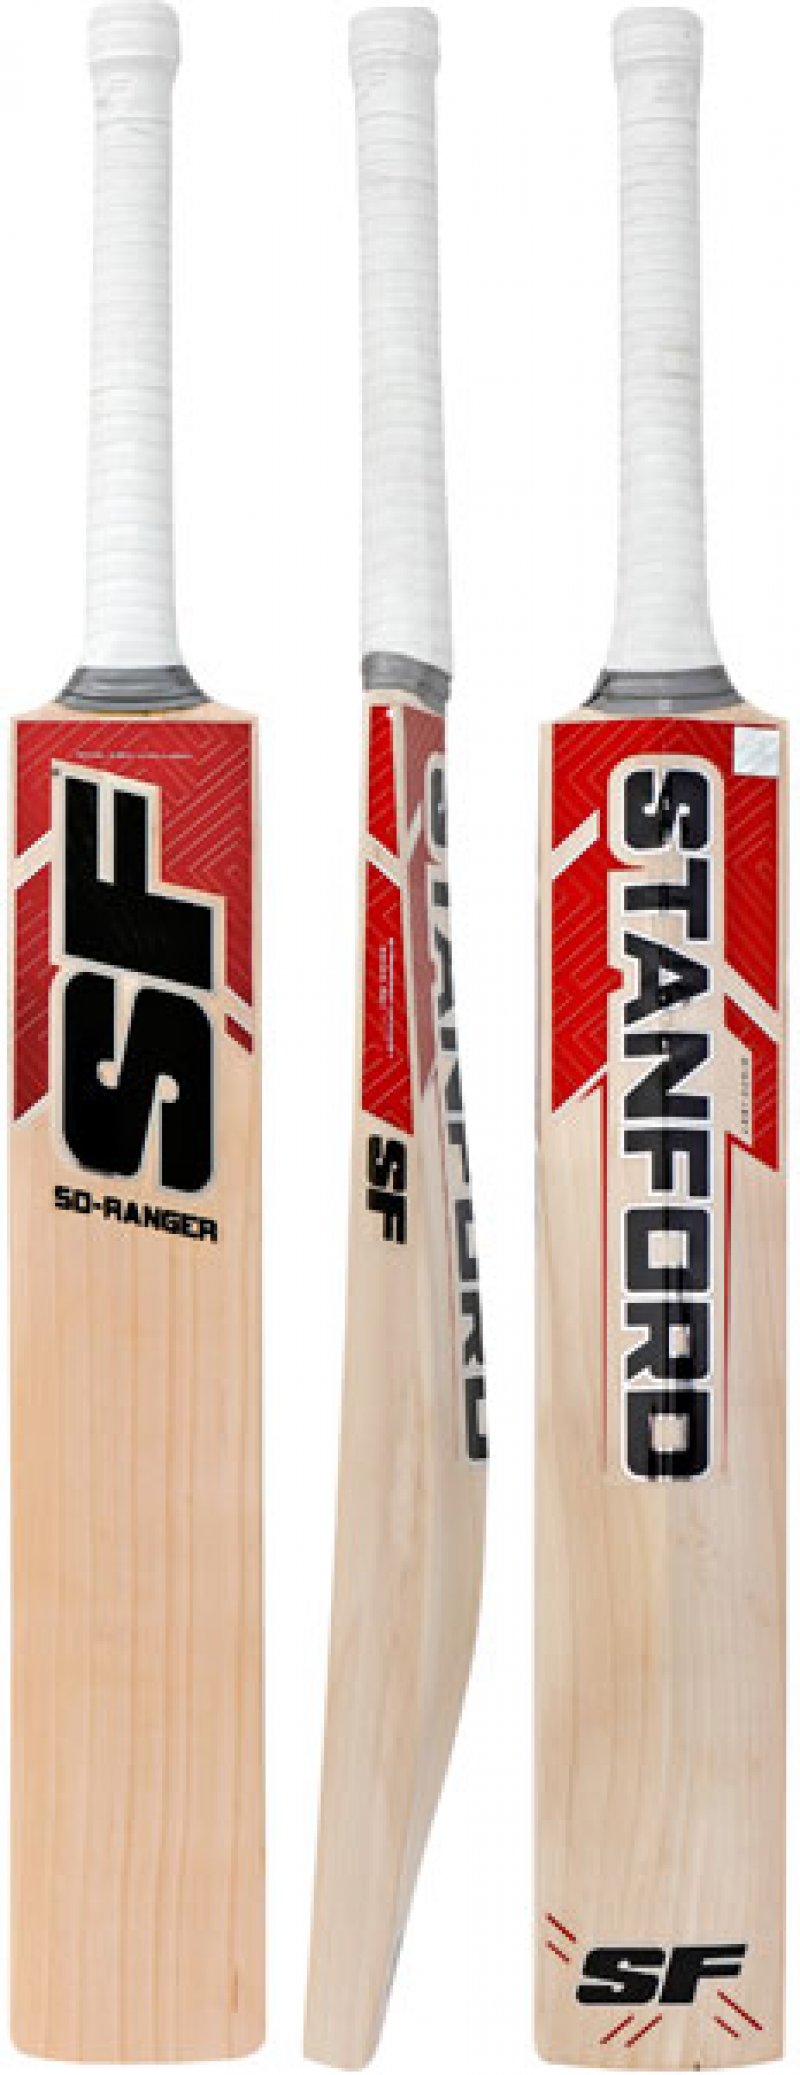 SF Stanford SD Ranger Cricket Bat